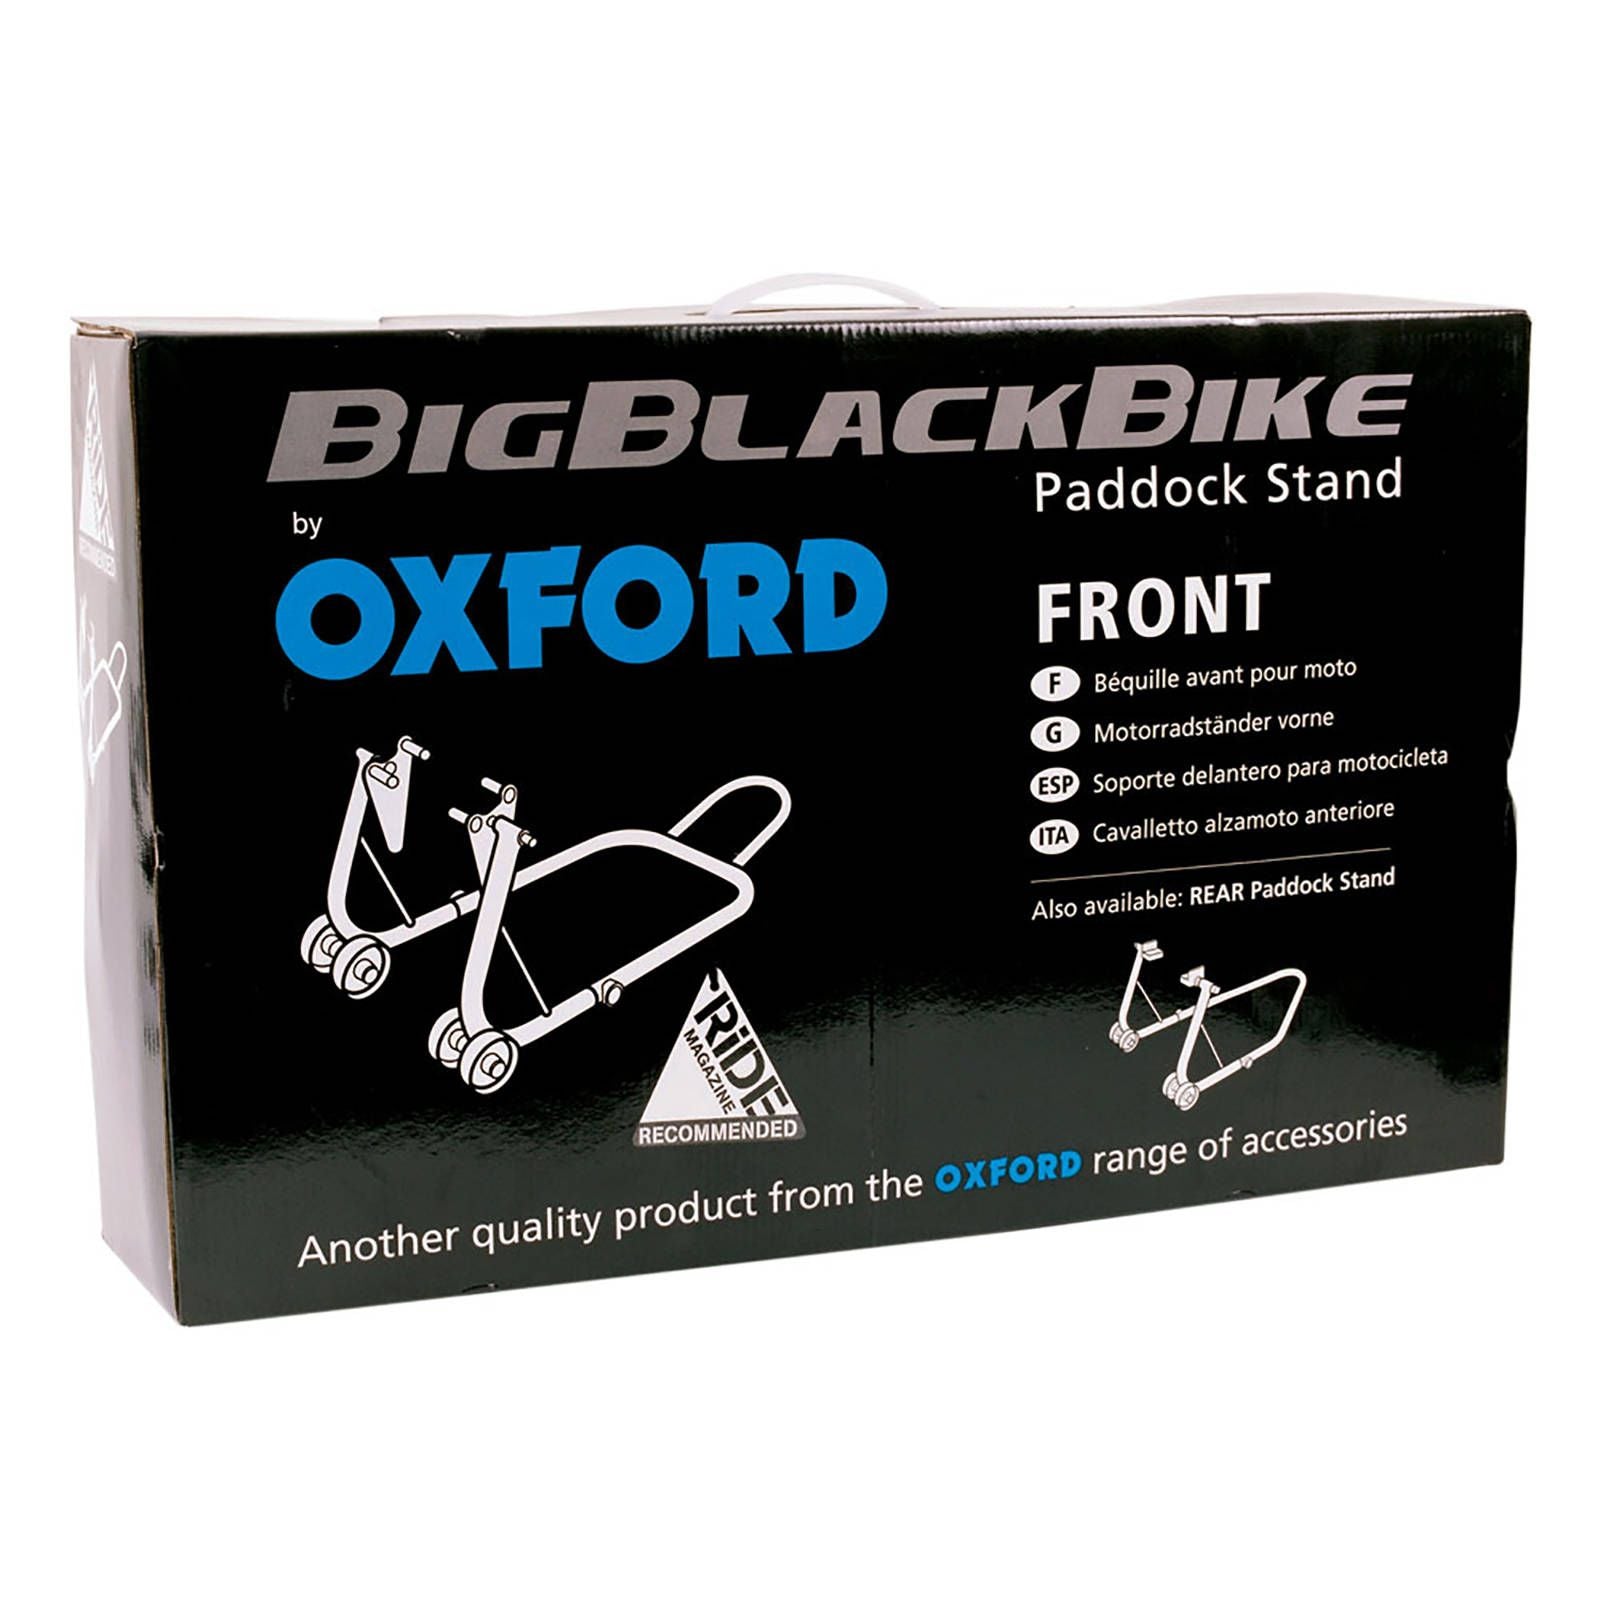 New OXFORD Big Black Bike Paddock Stand - Front #OXSP822